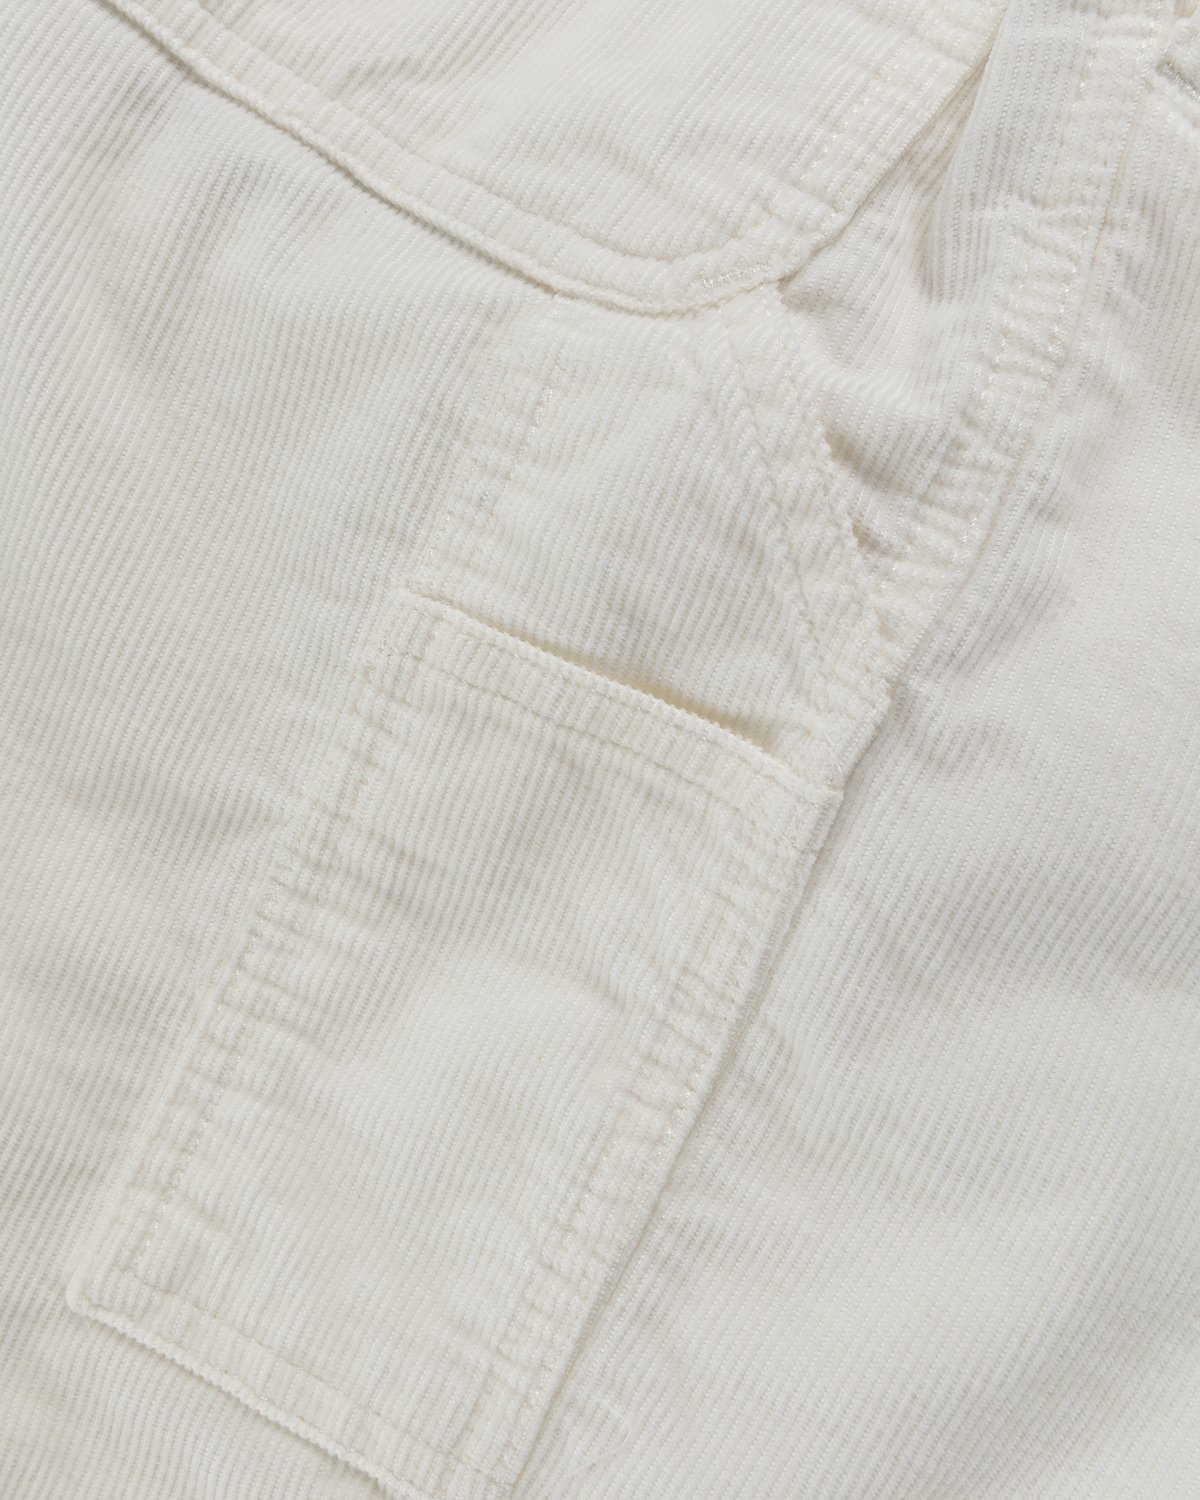 Carhartt WIP - Flint Short Wax Rinsed - Clothing - White - Image 5